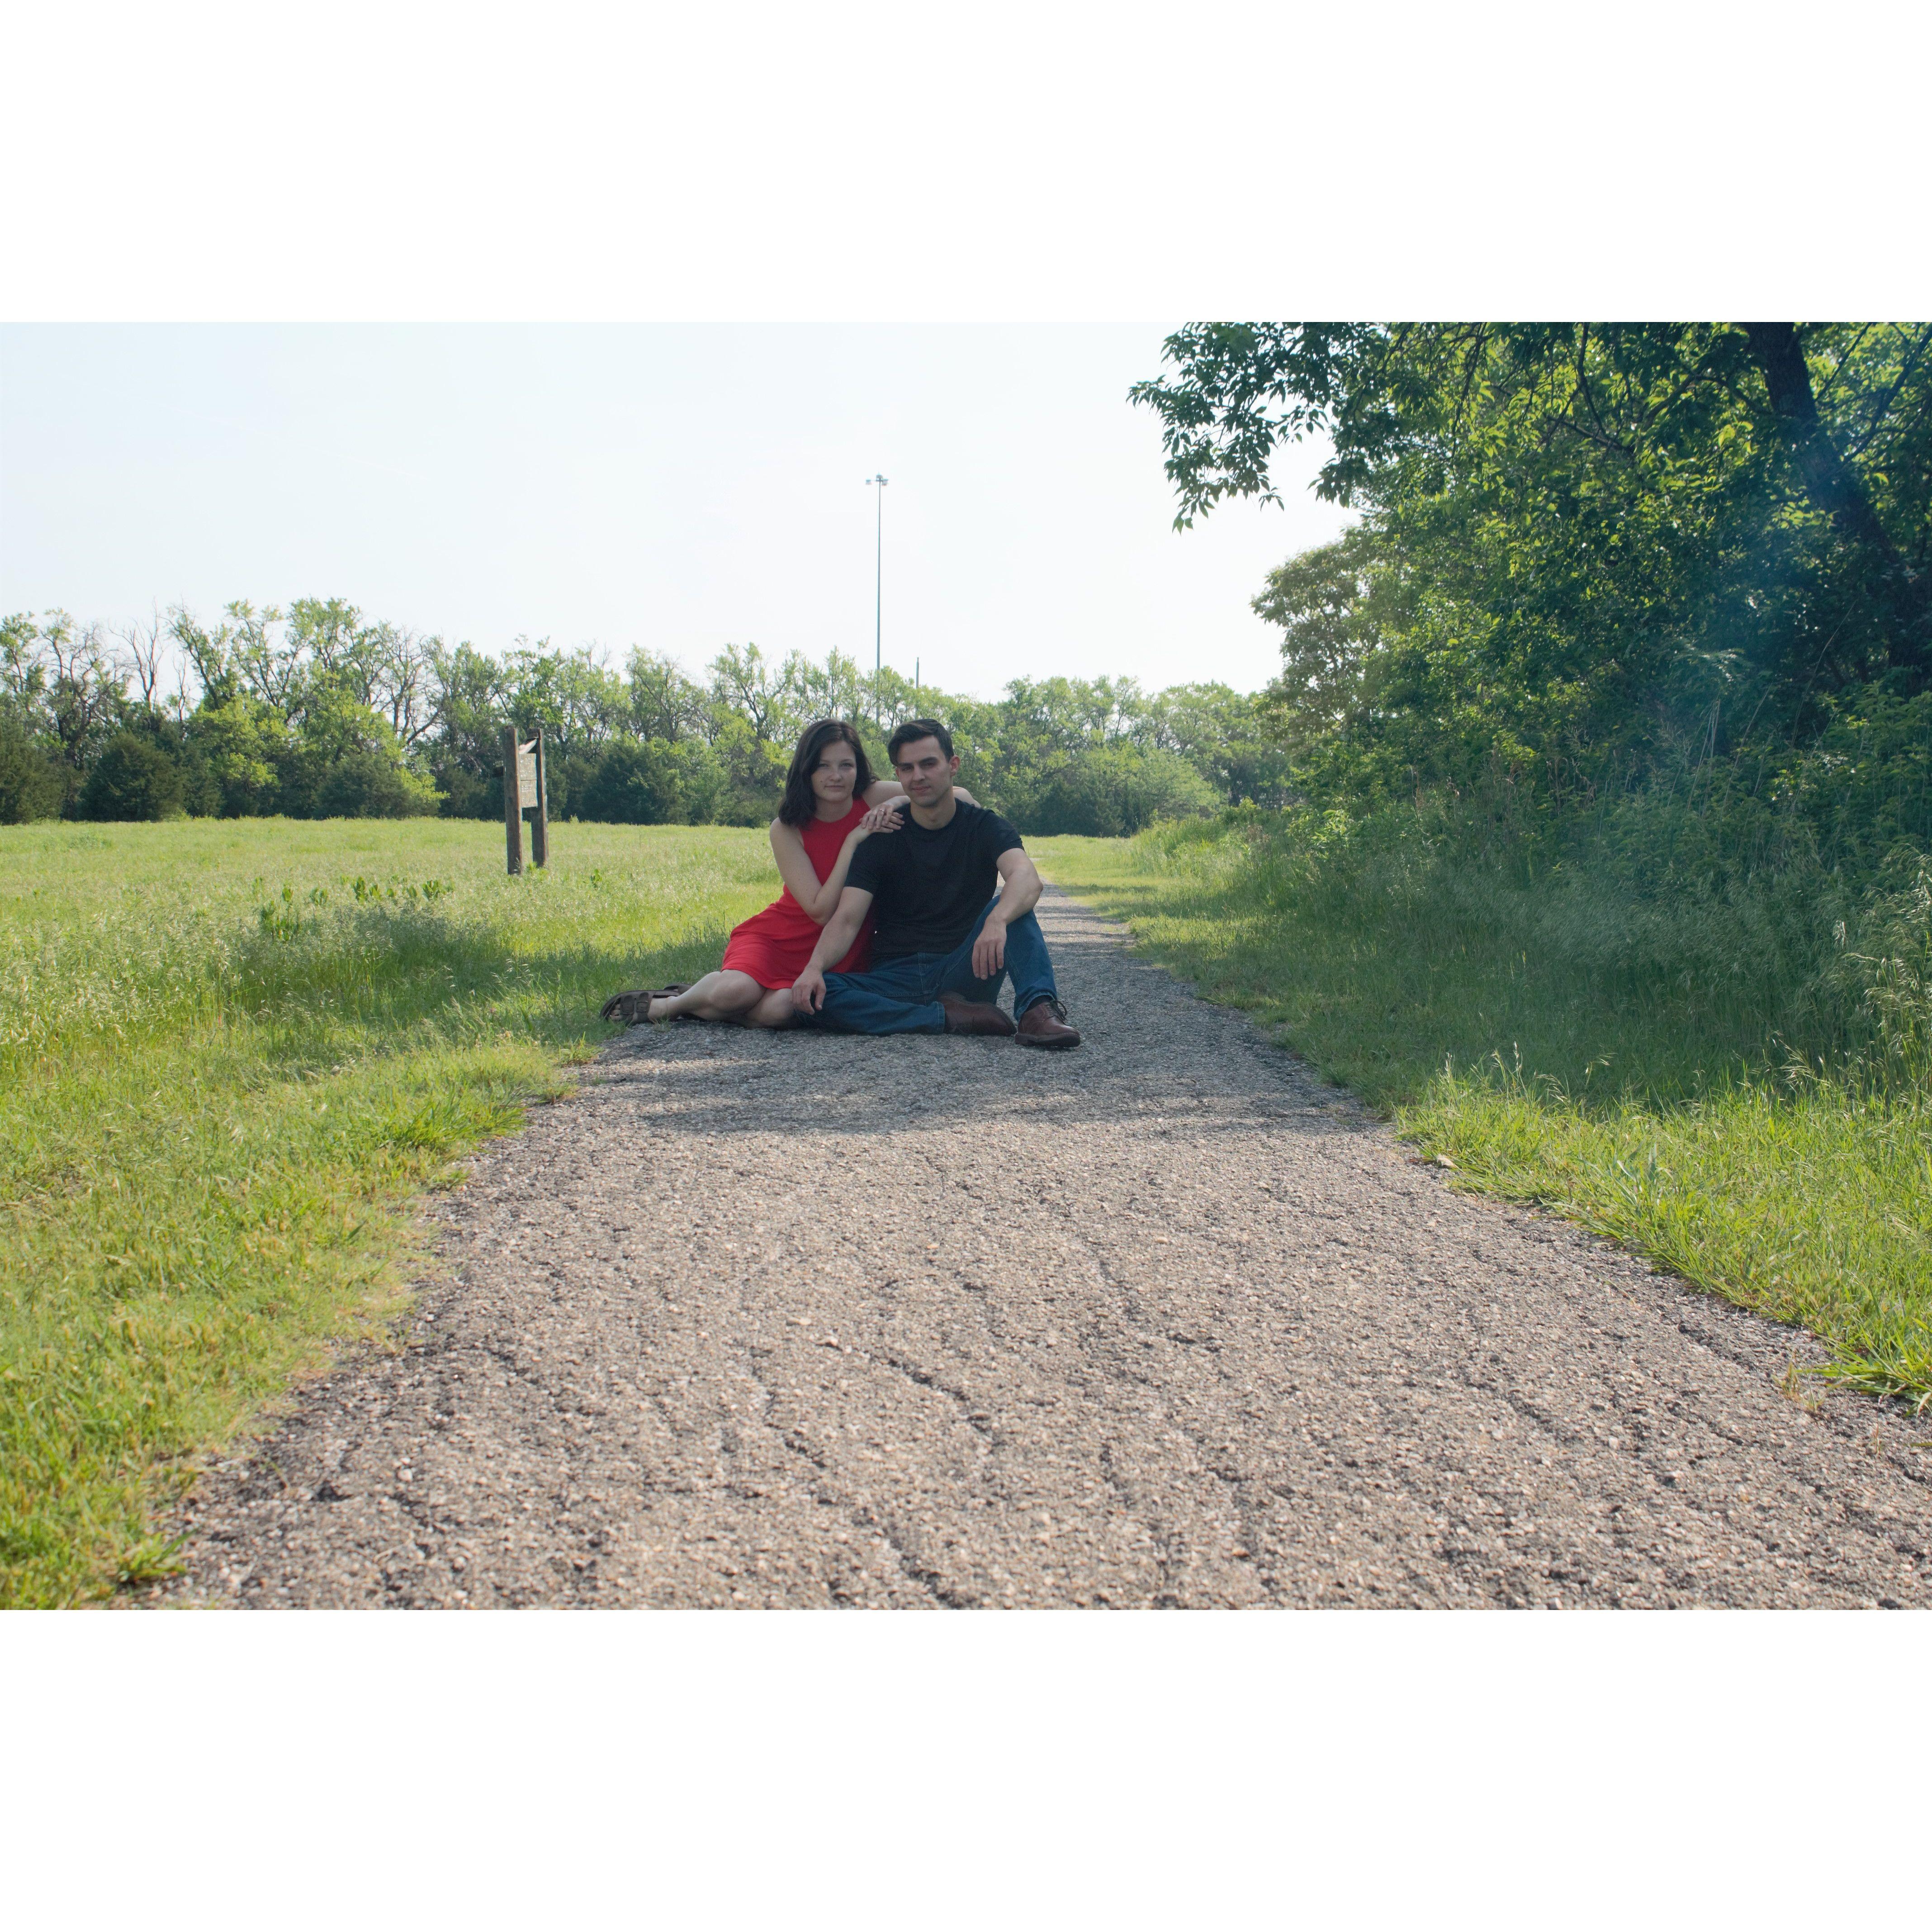 "Happy couple takes break on sidewalk" - istockphoto